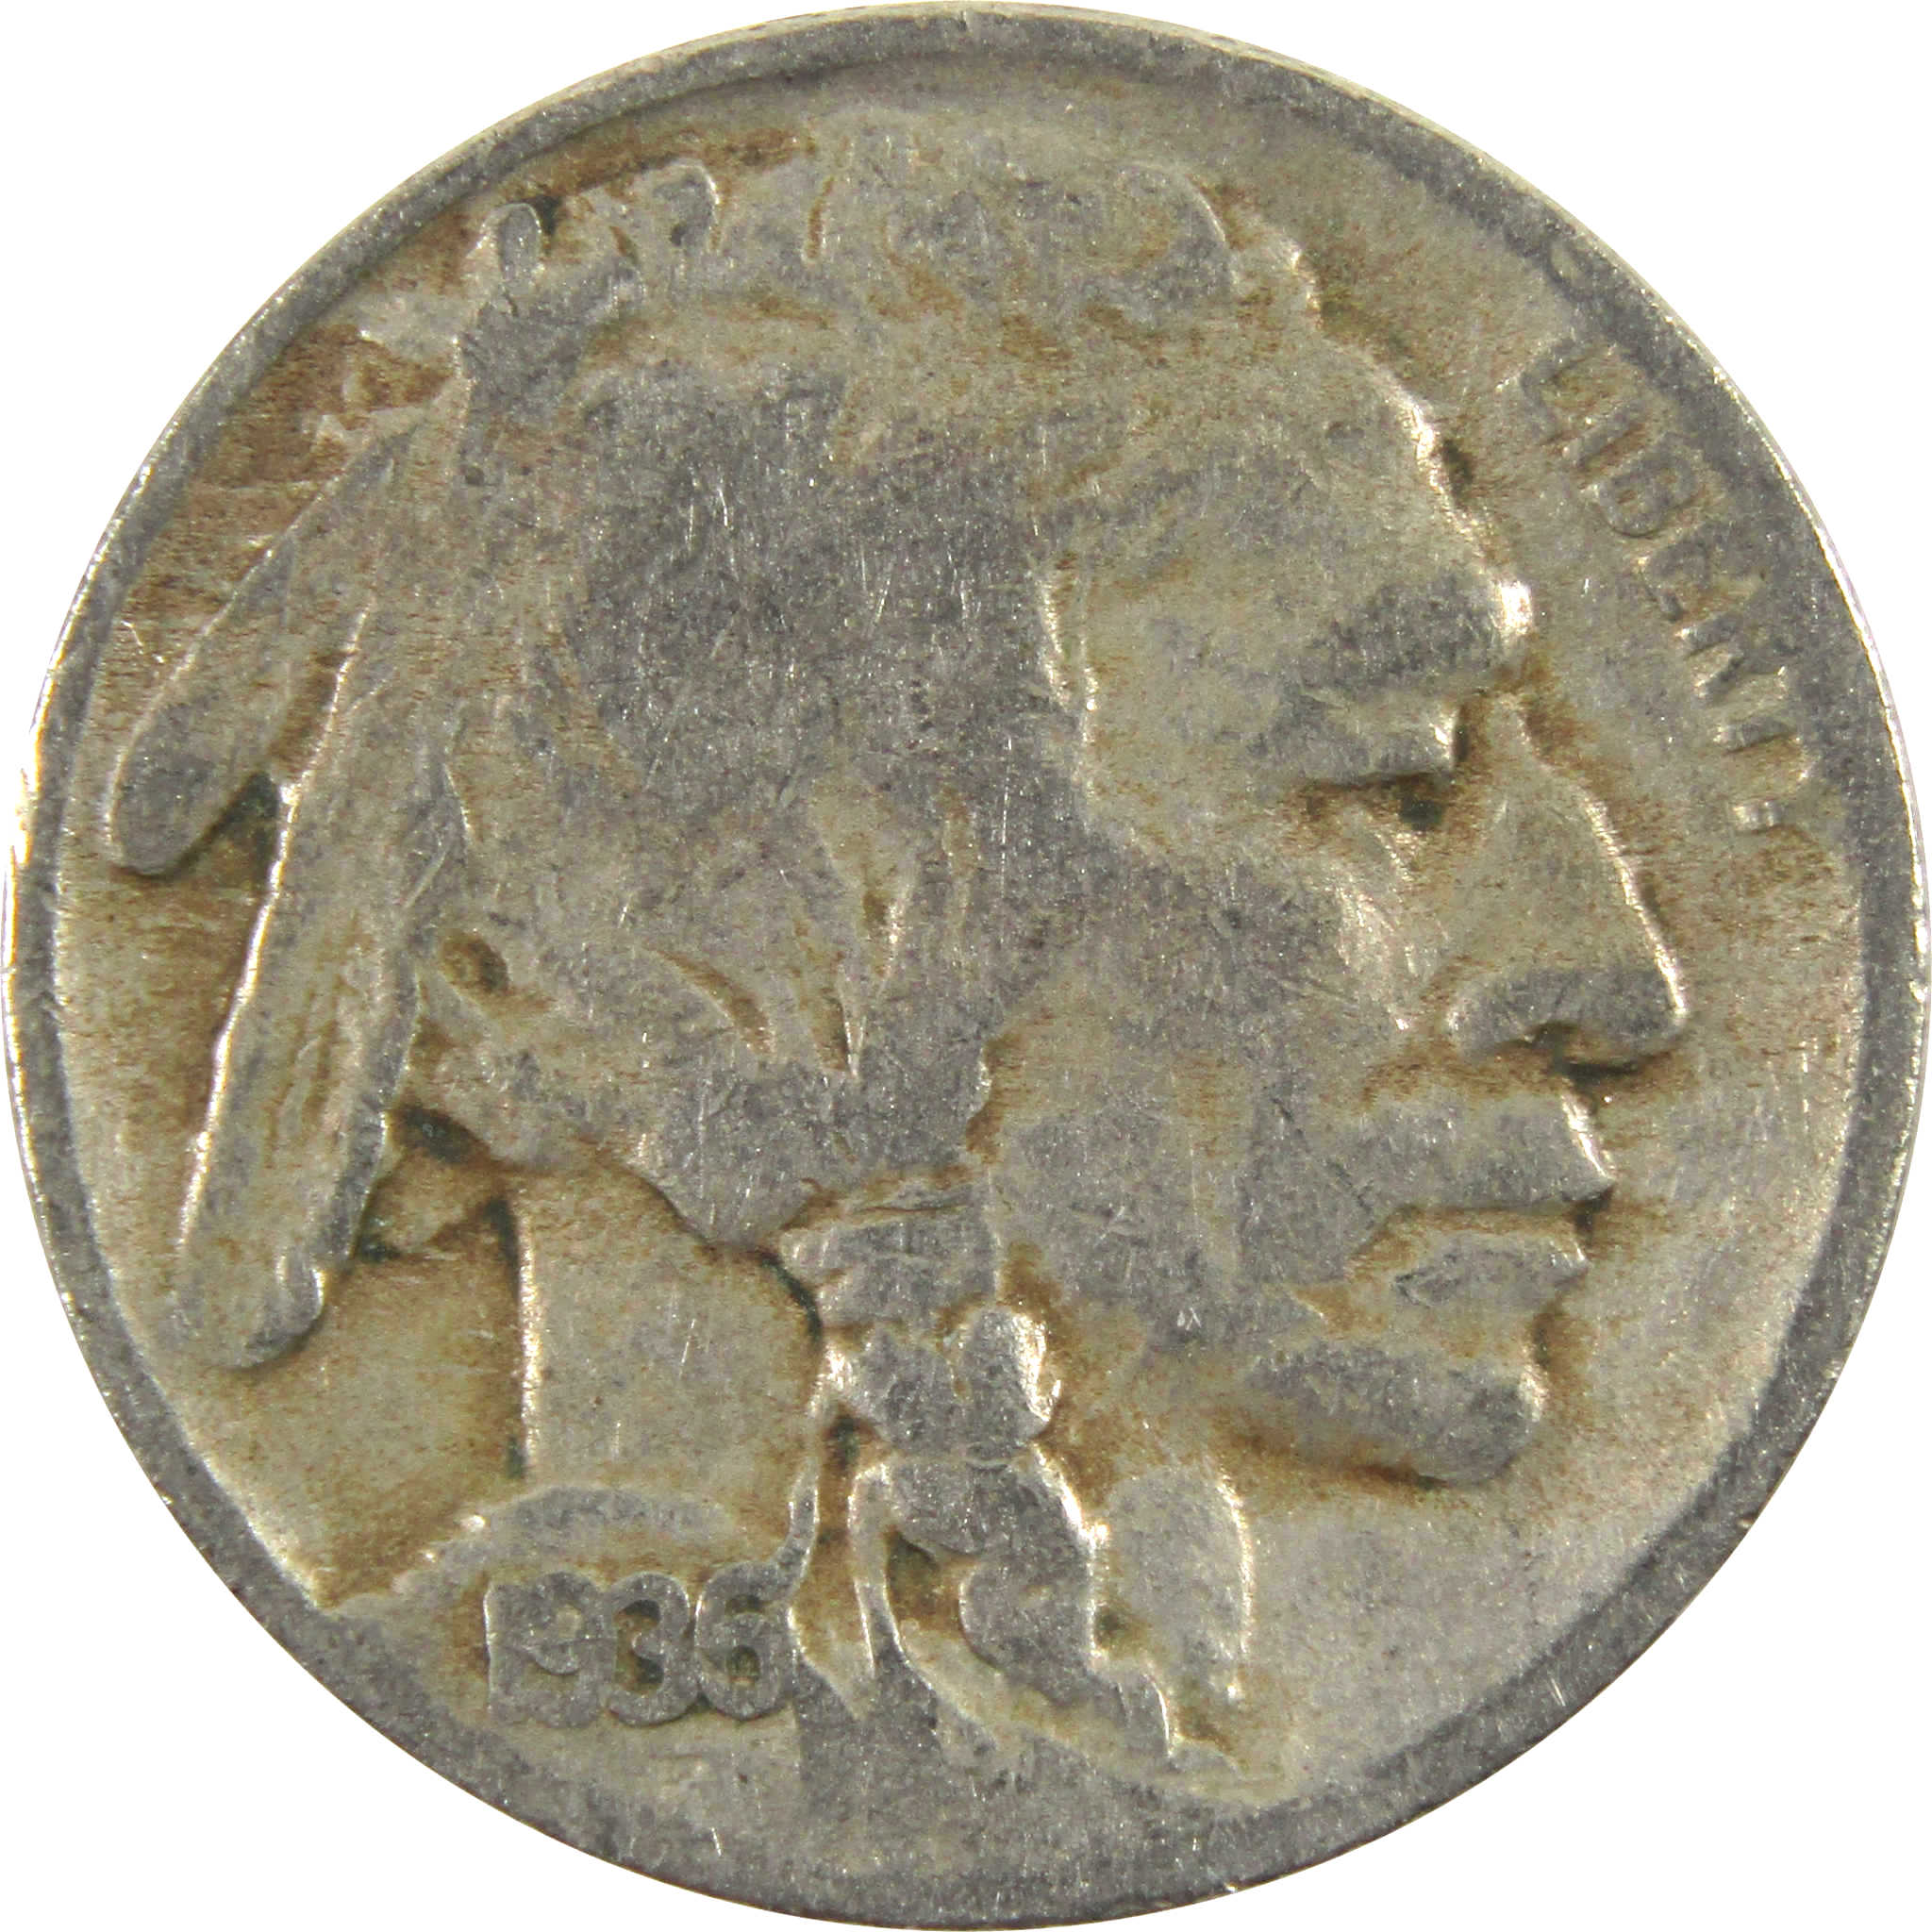 1936 D Indian Head Buffalo Nickel AG About Good 5c Coin